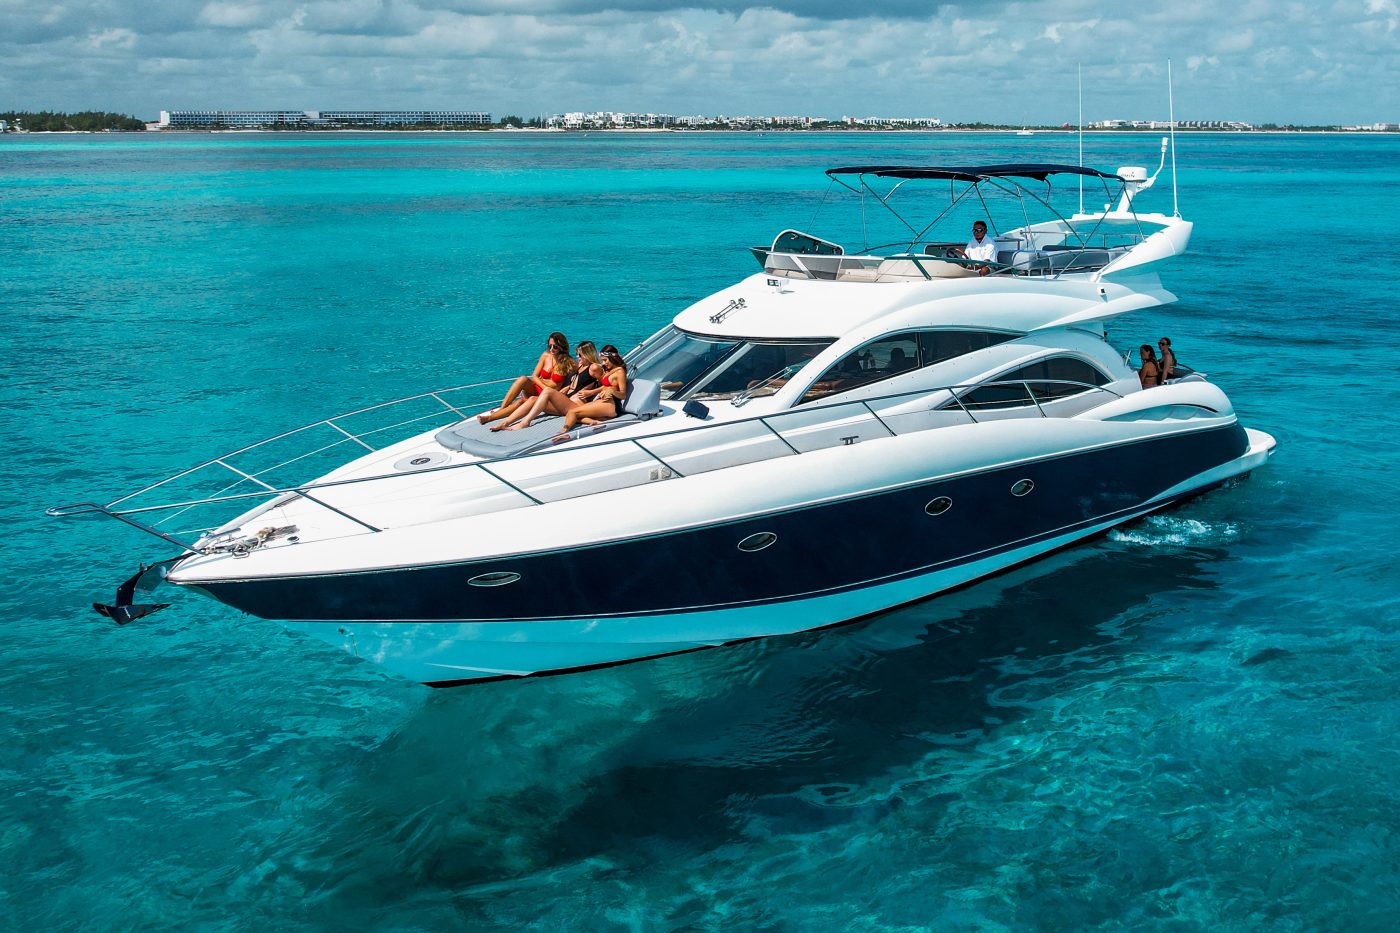 Sunseeker Luxury Yacht Charters to Cozumel, Isla Mujeres and Cancun Tulum Rentals main